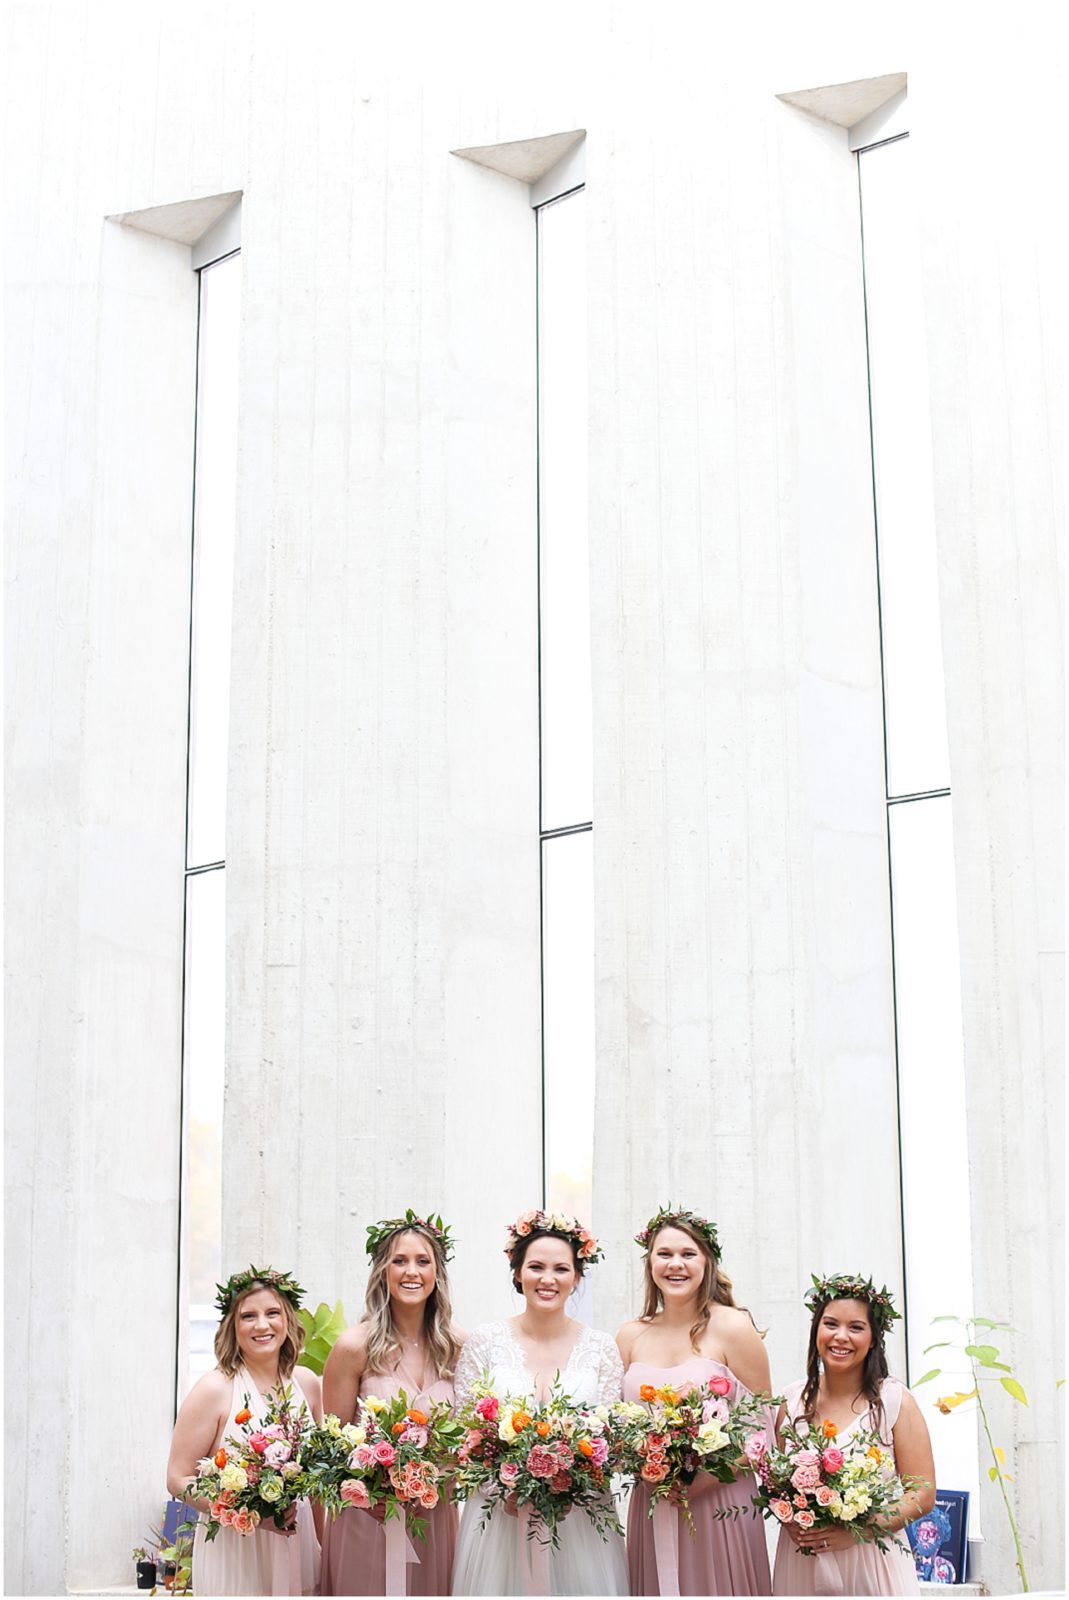 Kemper Museum of Contemporary Art Wedding Photography - Boho Lace Dress and Bride - Mariam Saifan Photography - KC Overland Park Kansas City Wedding Photographer